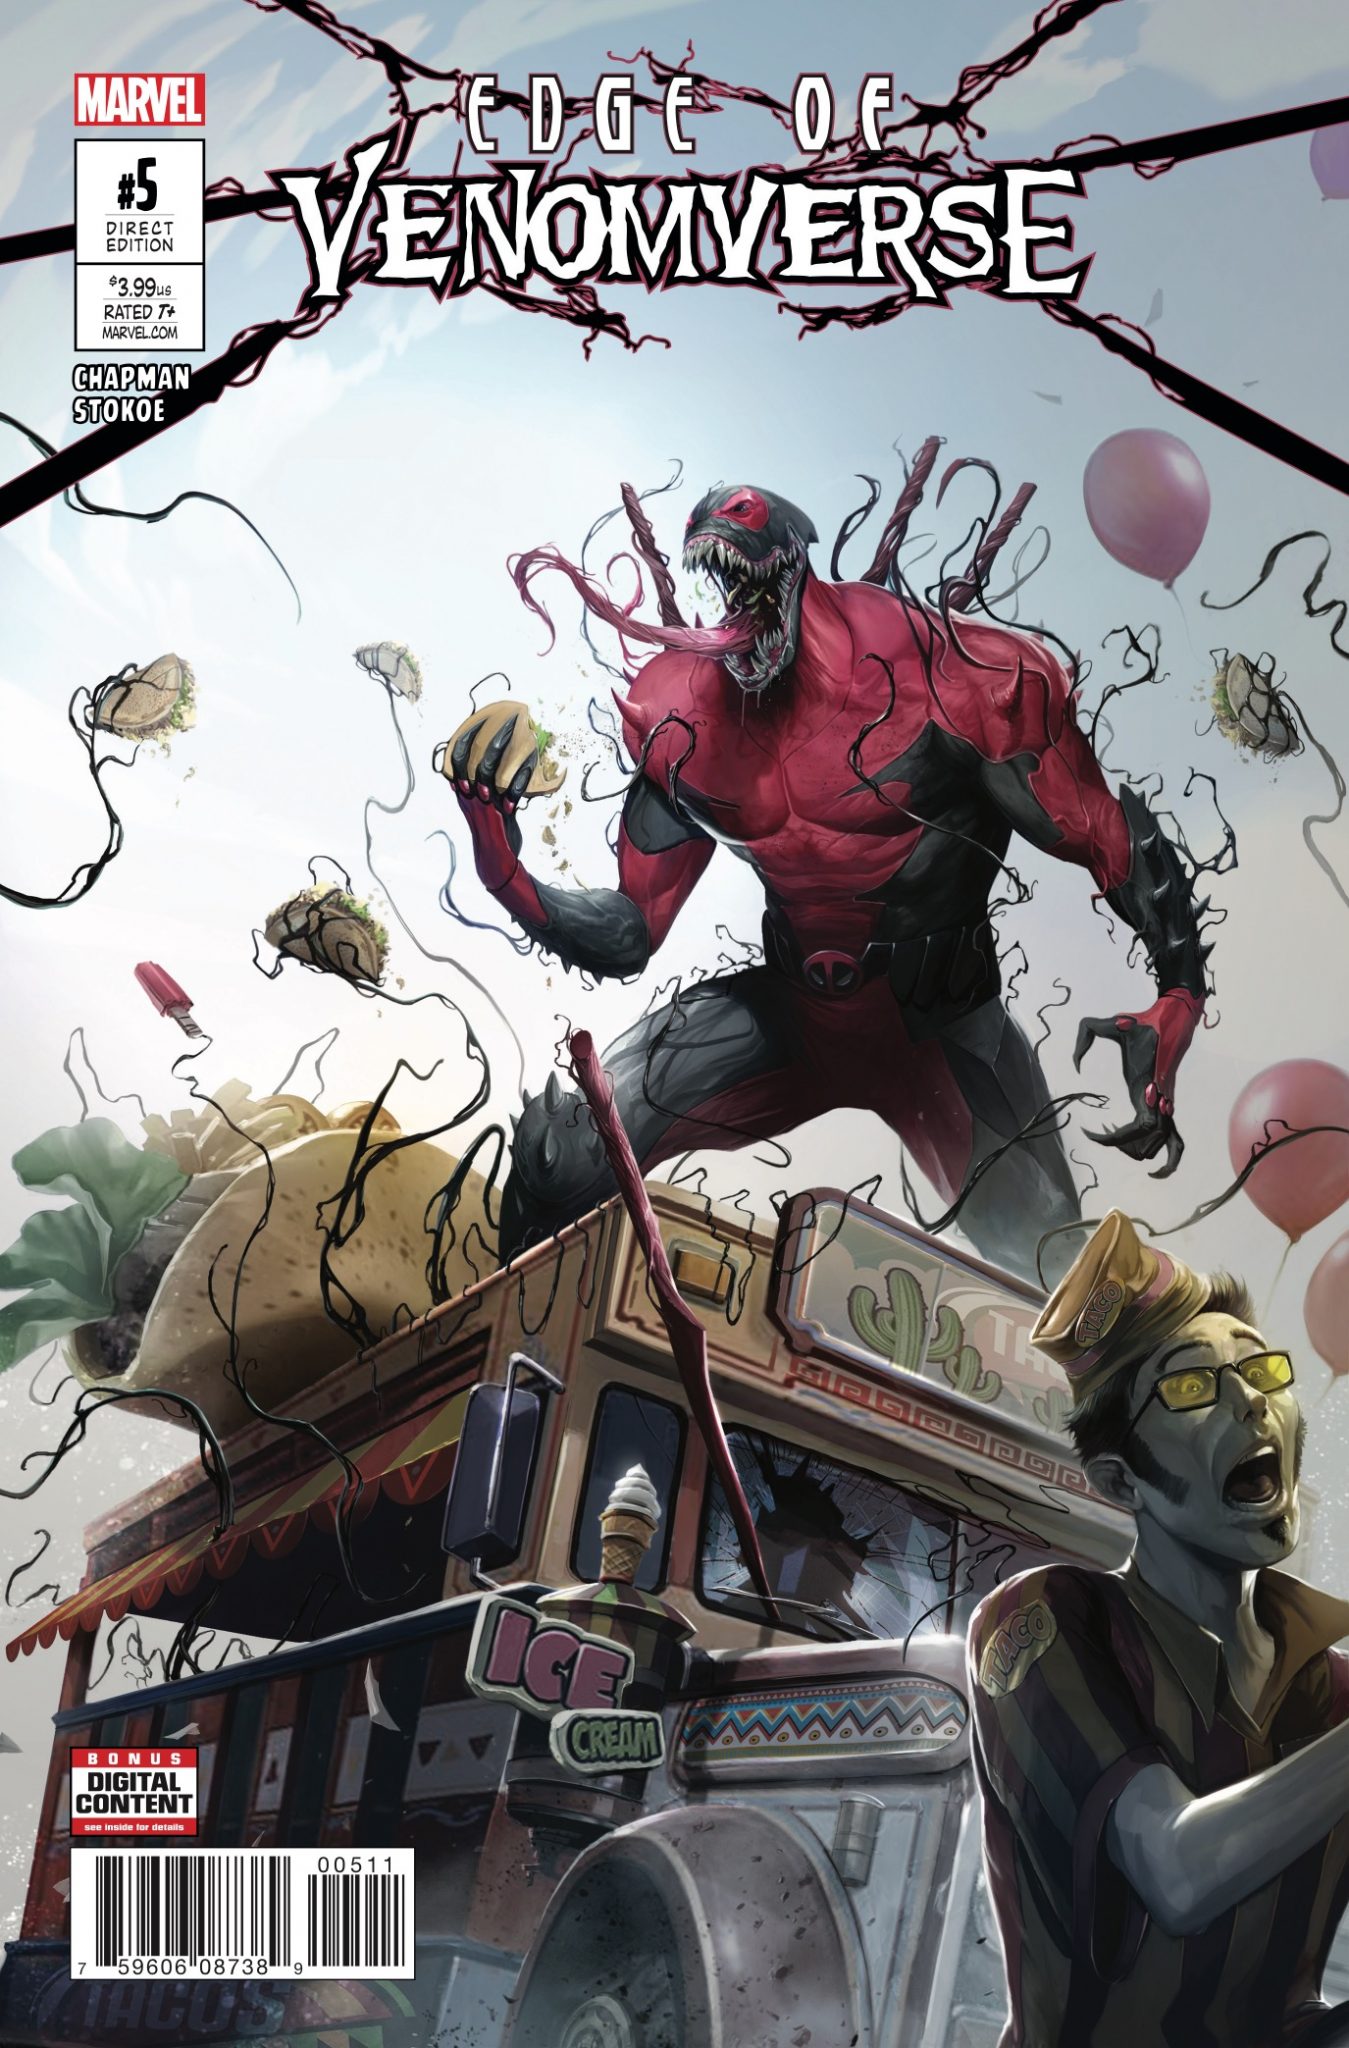 Marvel Preview: Edge of Venomverse #5